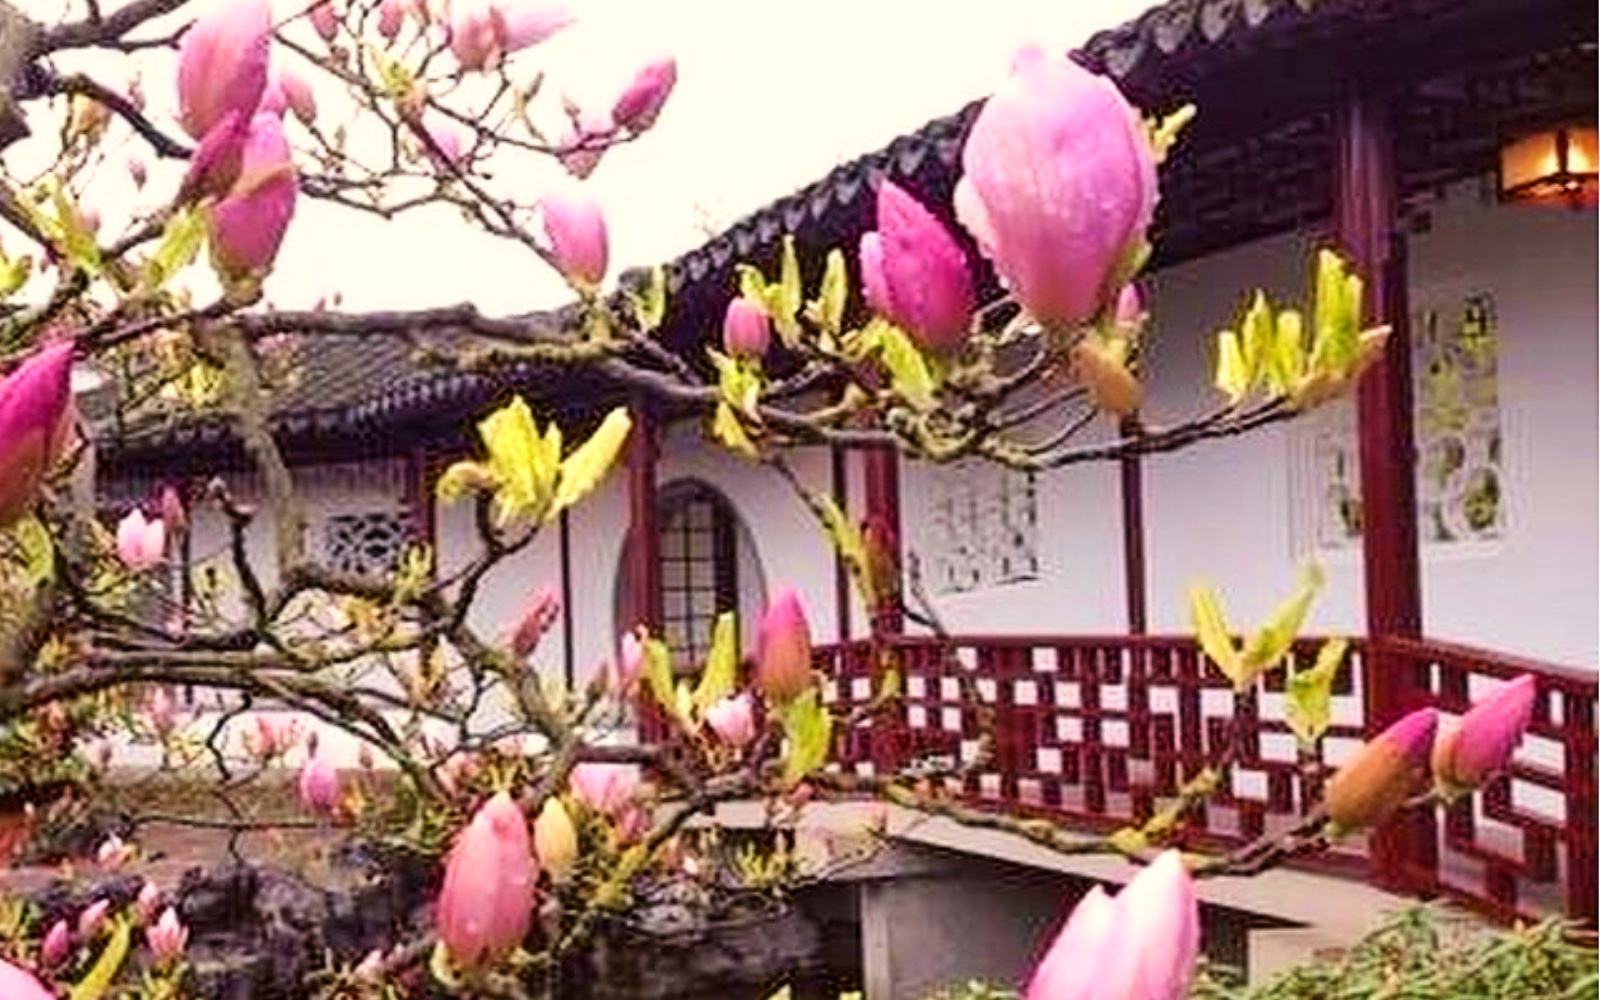 View of a building at the Dr. Sun Yat-Sen Classical Garden